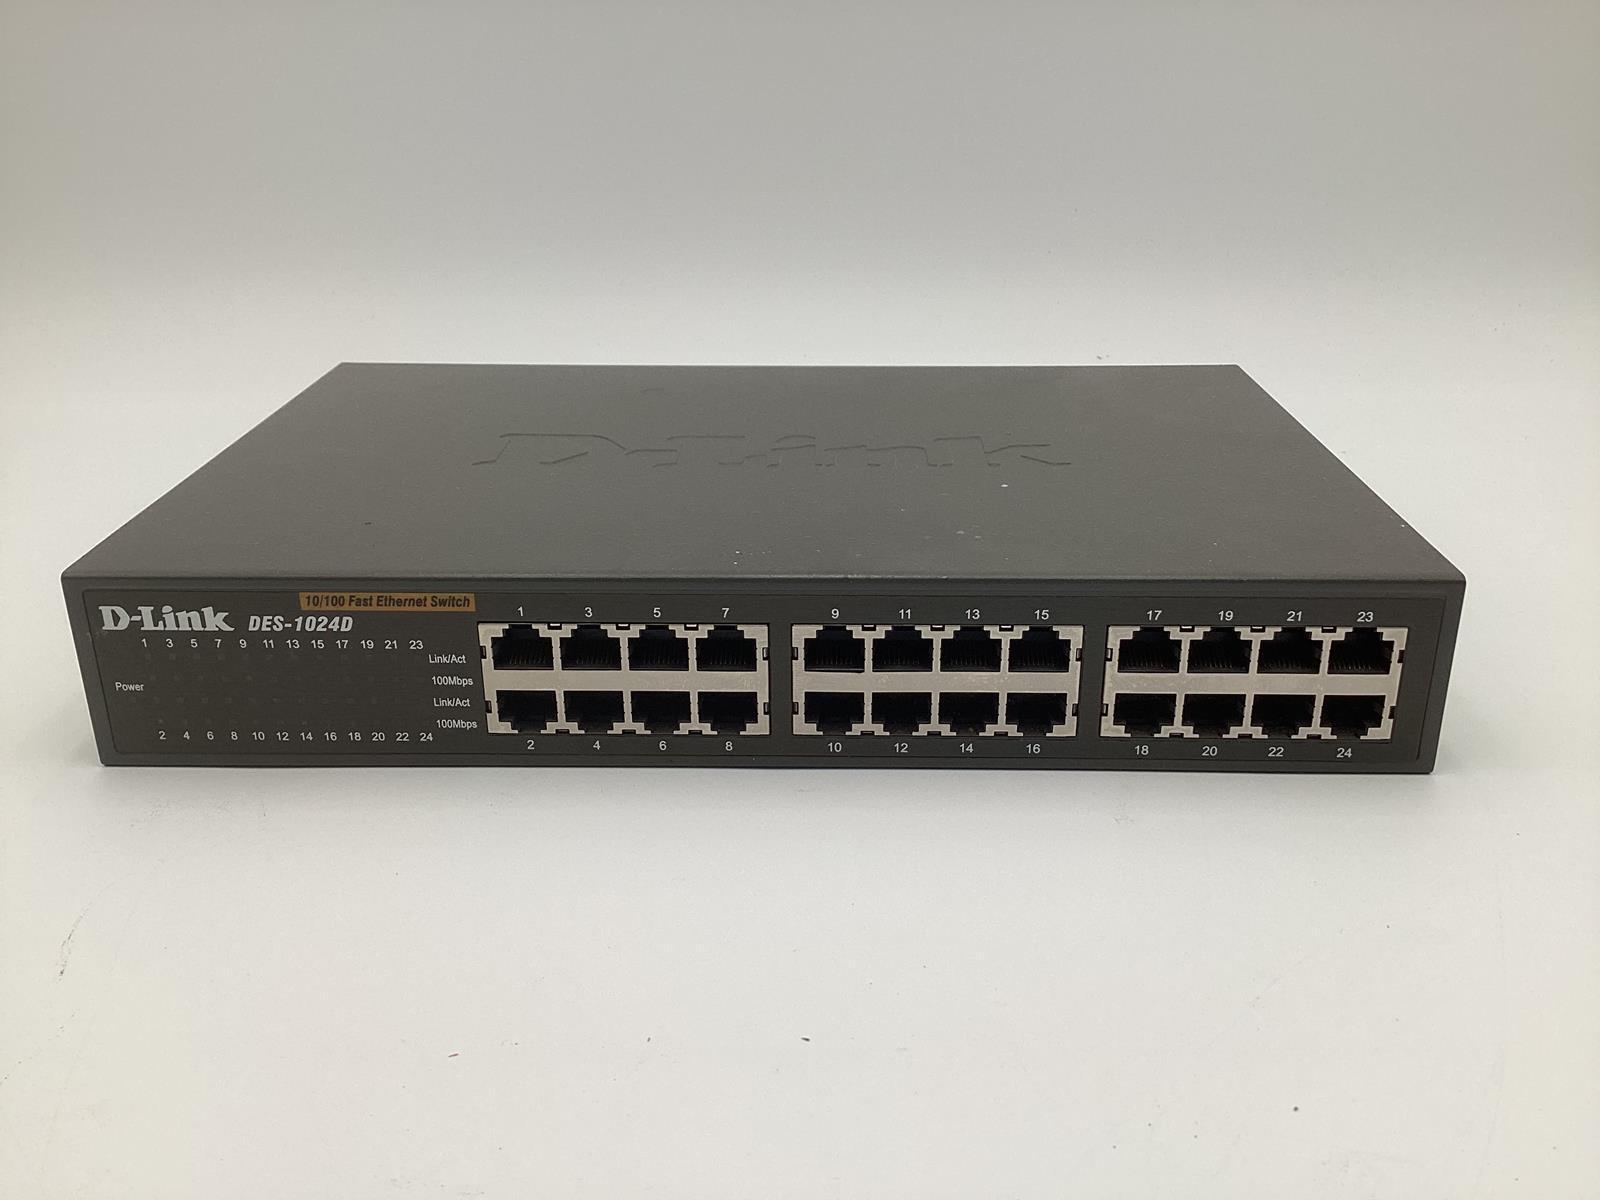 D-Link DES-1024D 10/100 Fast Ethernet Switch